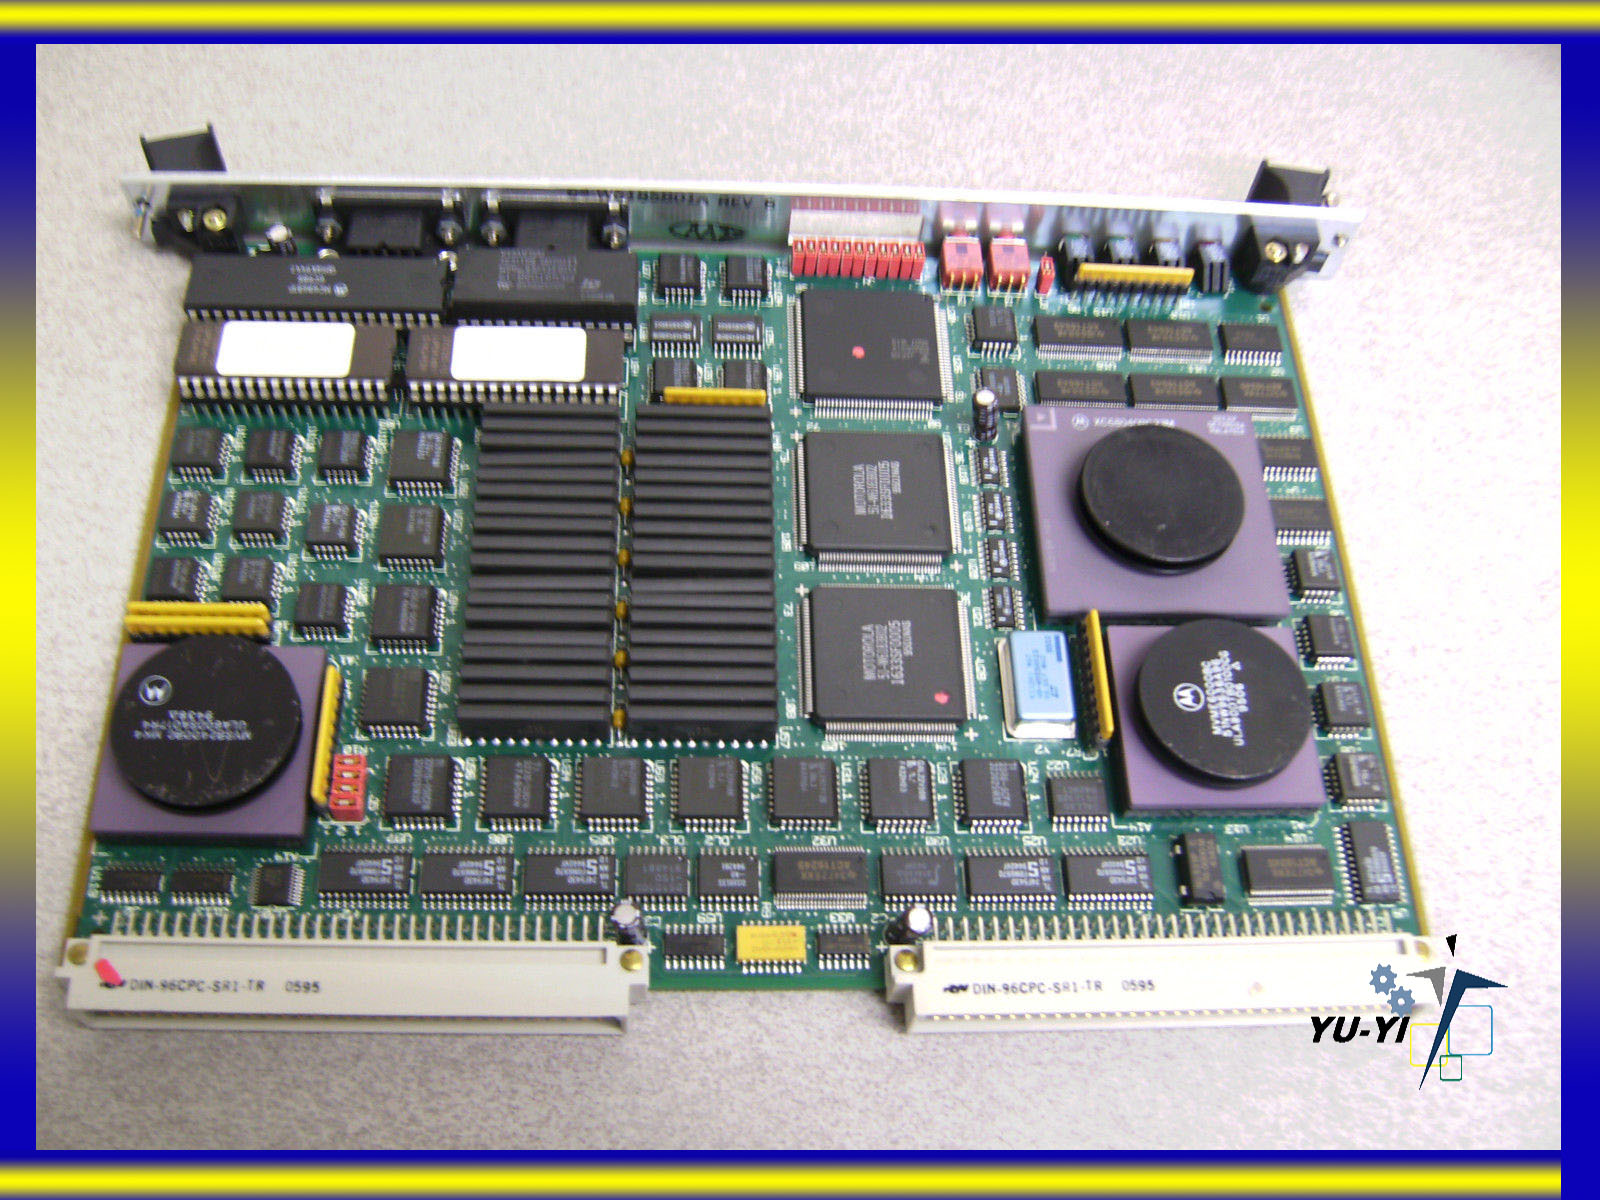 MOTOROLA MVME165-03 68040 CPU, 33MHZ, 4MB MEMORY, VSB, 2 SERIAL PORTS